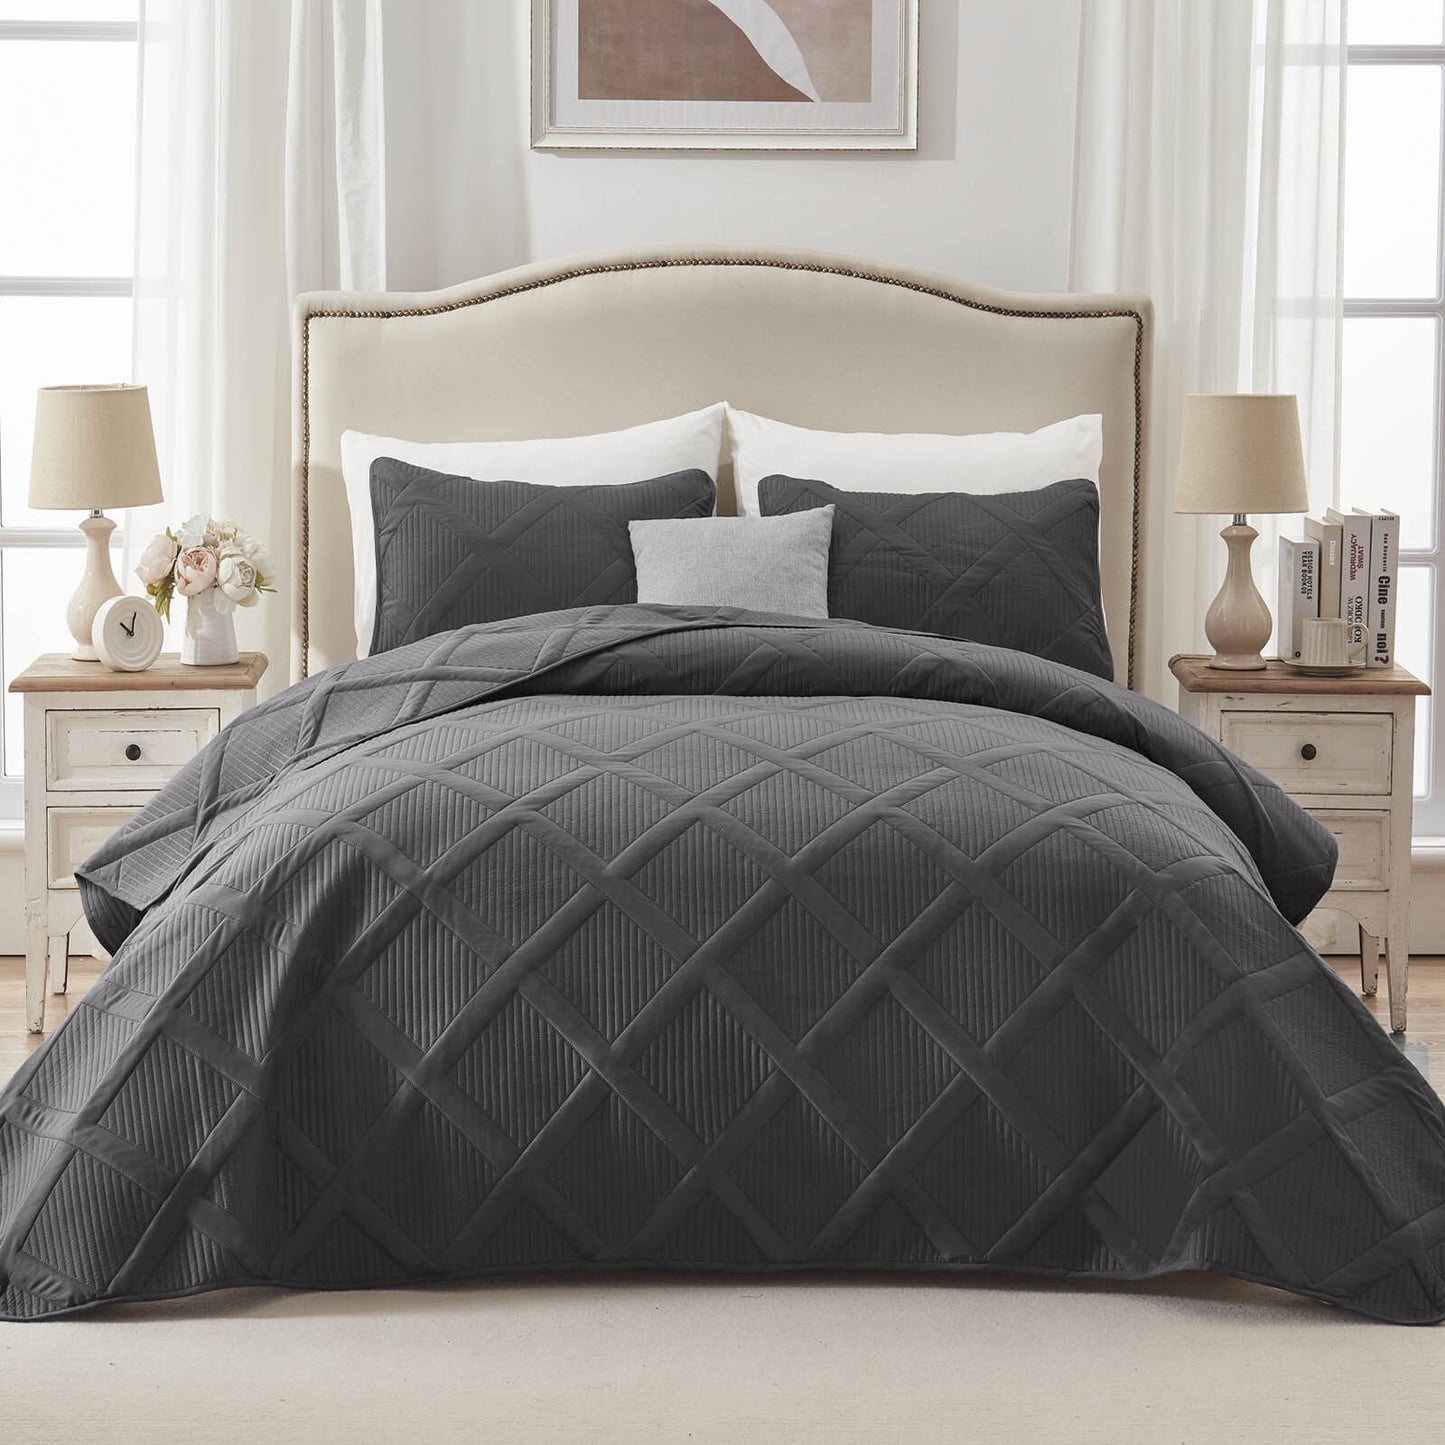 Exclusivo Mezcla Ultrasonic California King Quilt Set, Lightweight Bedspreads Modern Striped Coverlet with 2 Pillow Shams, Grey